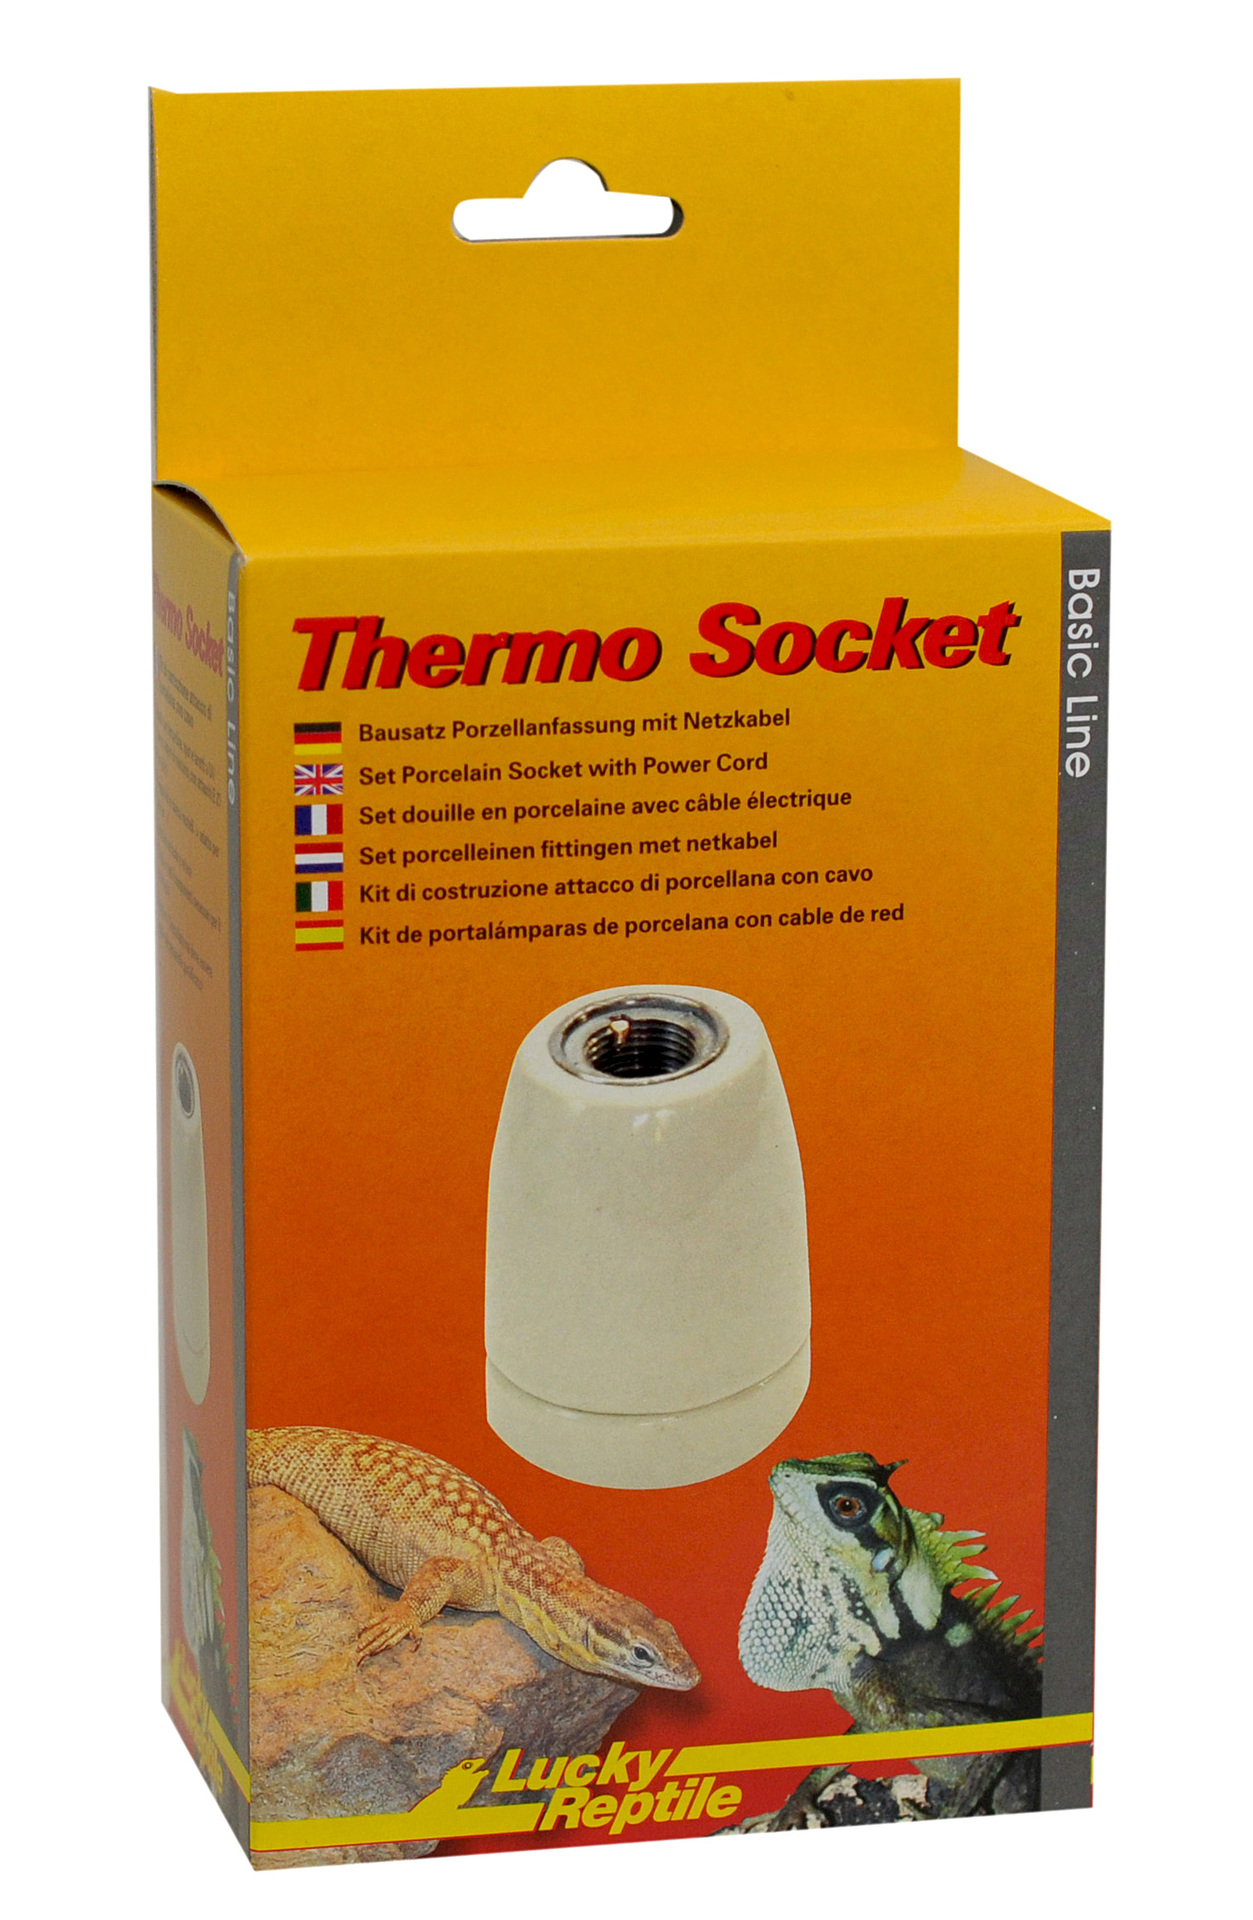 Peter Hoch Thermo Socket – Porzellanfassung